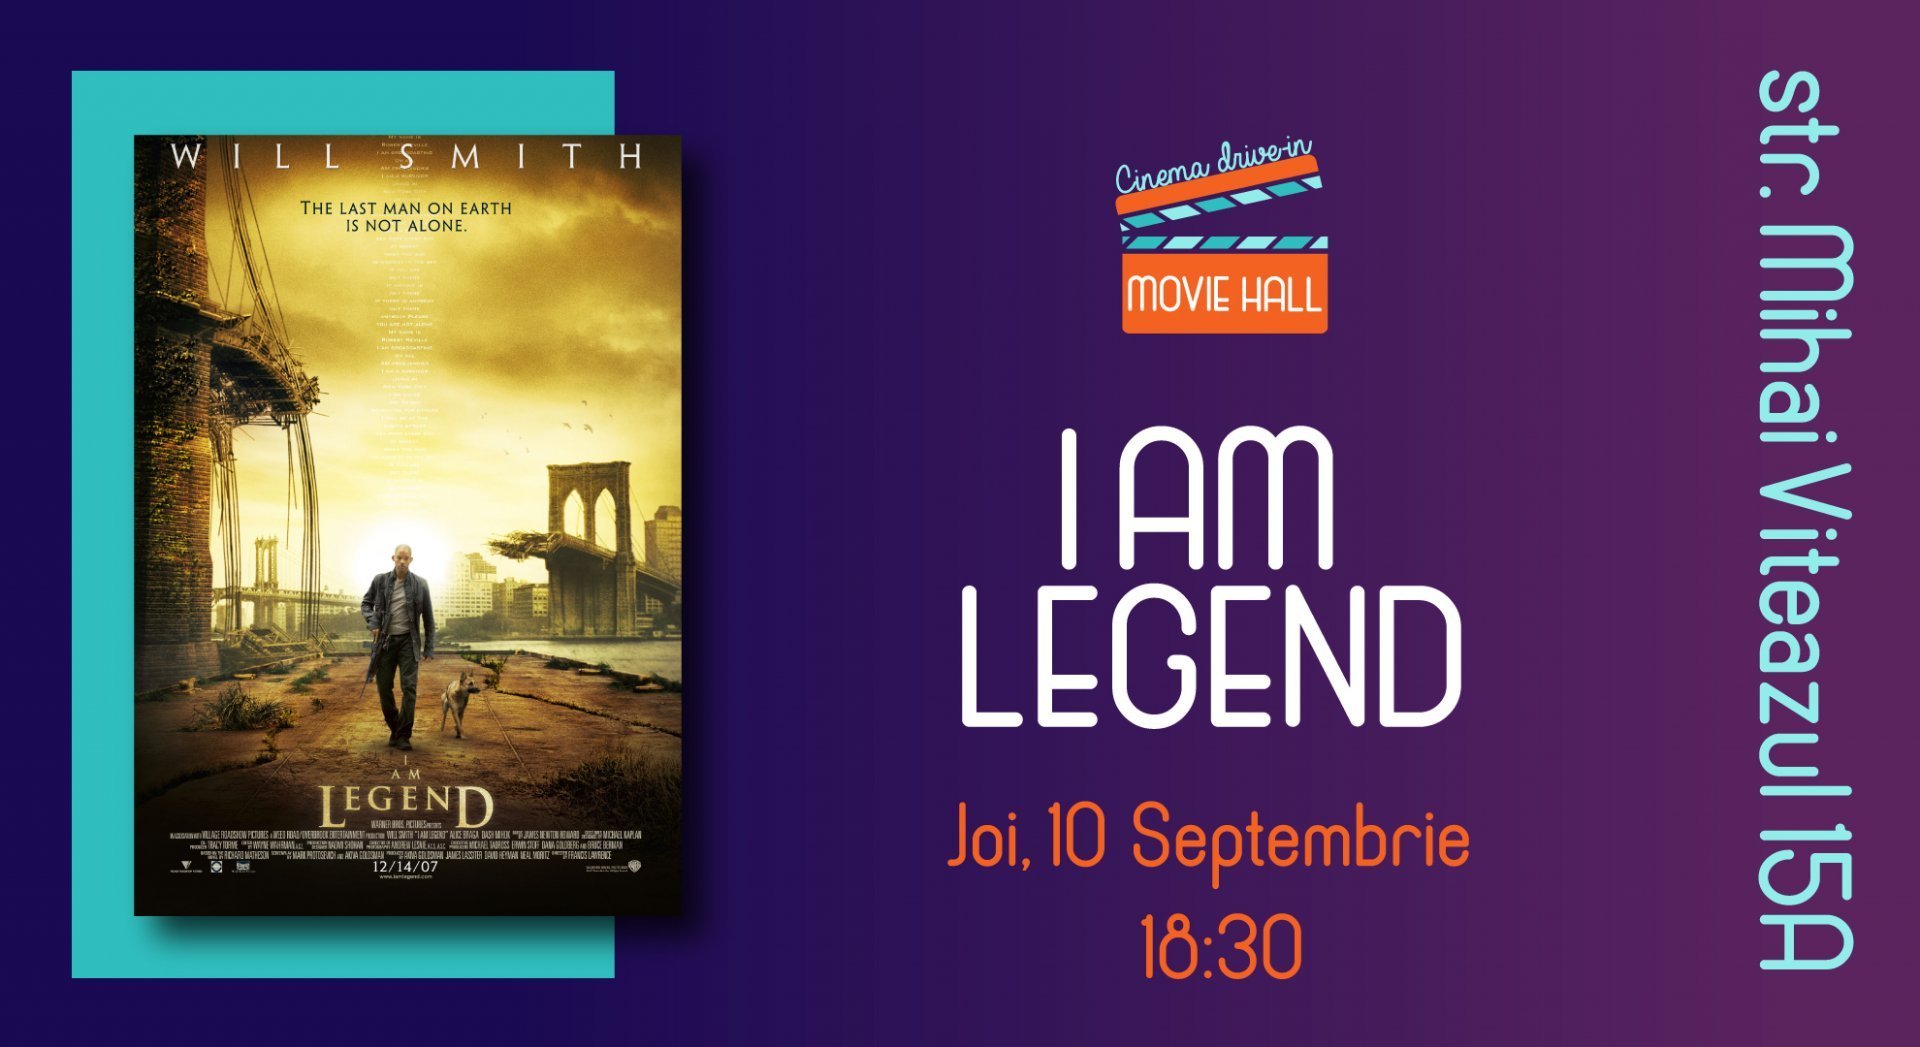 Movie Hall, drive-in cinema / I am legend